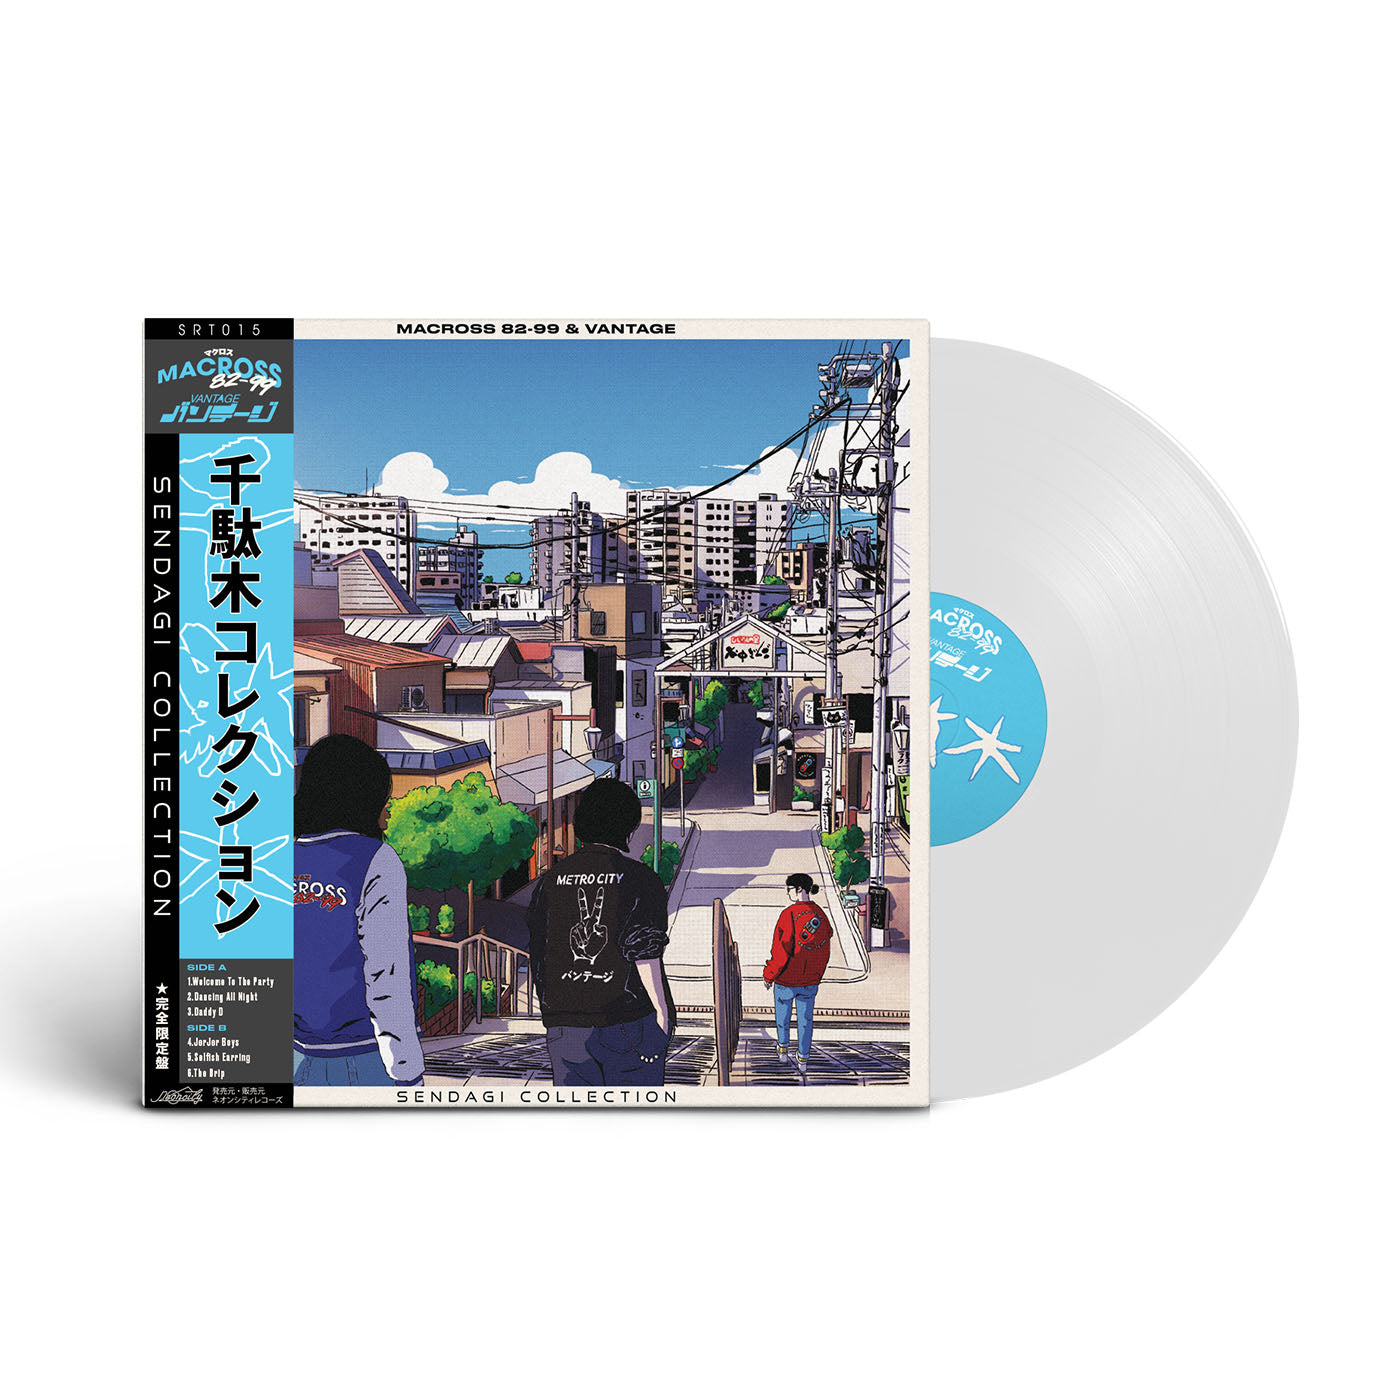 [Pre-order] Macross 82-99 & Vantage - 'Sendagi Collection' 12" Vinyl - Neoncity Records